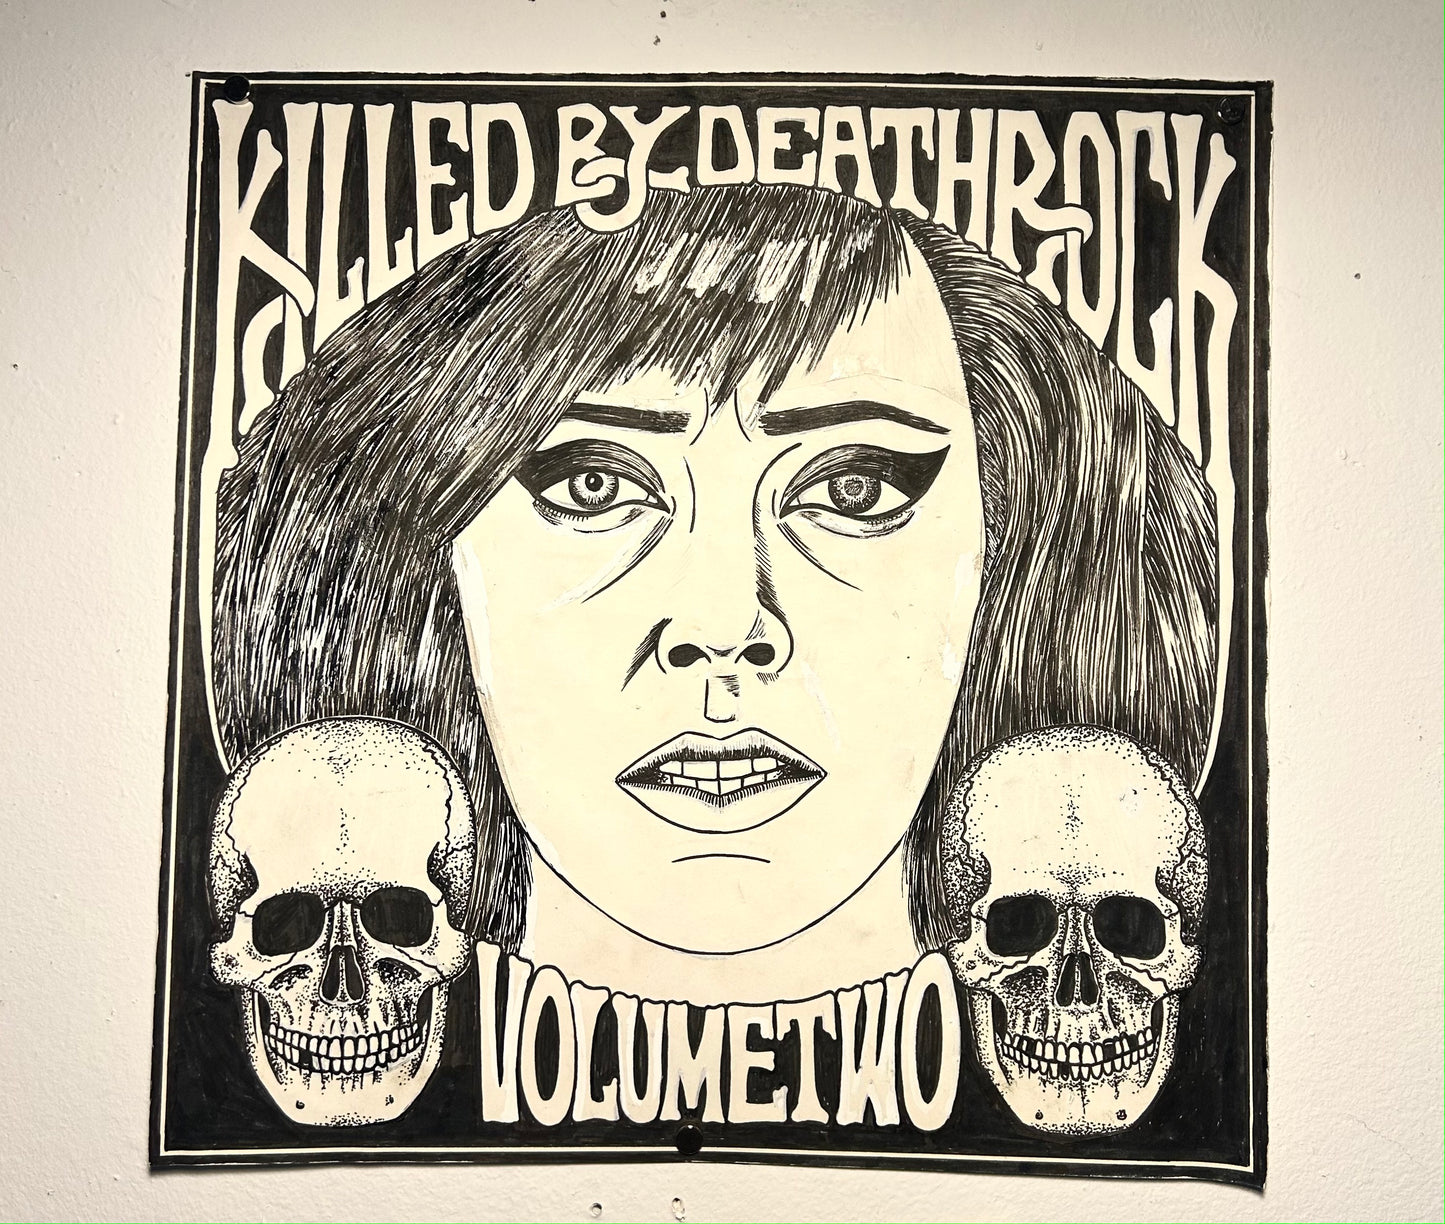 Death/Traitors "Killed By Deathrock Vol 2" (2014)